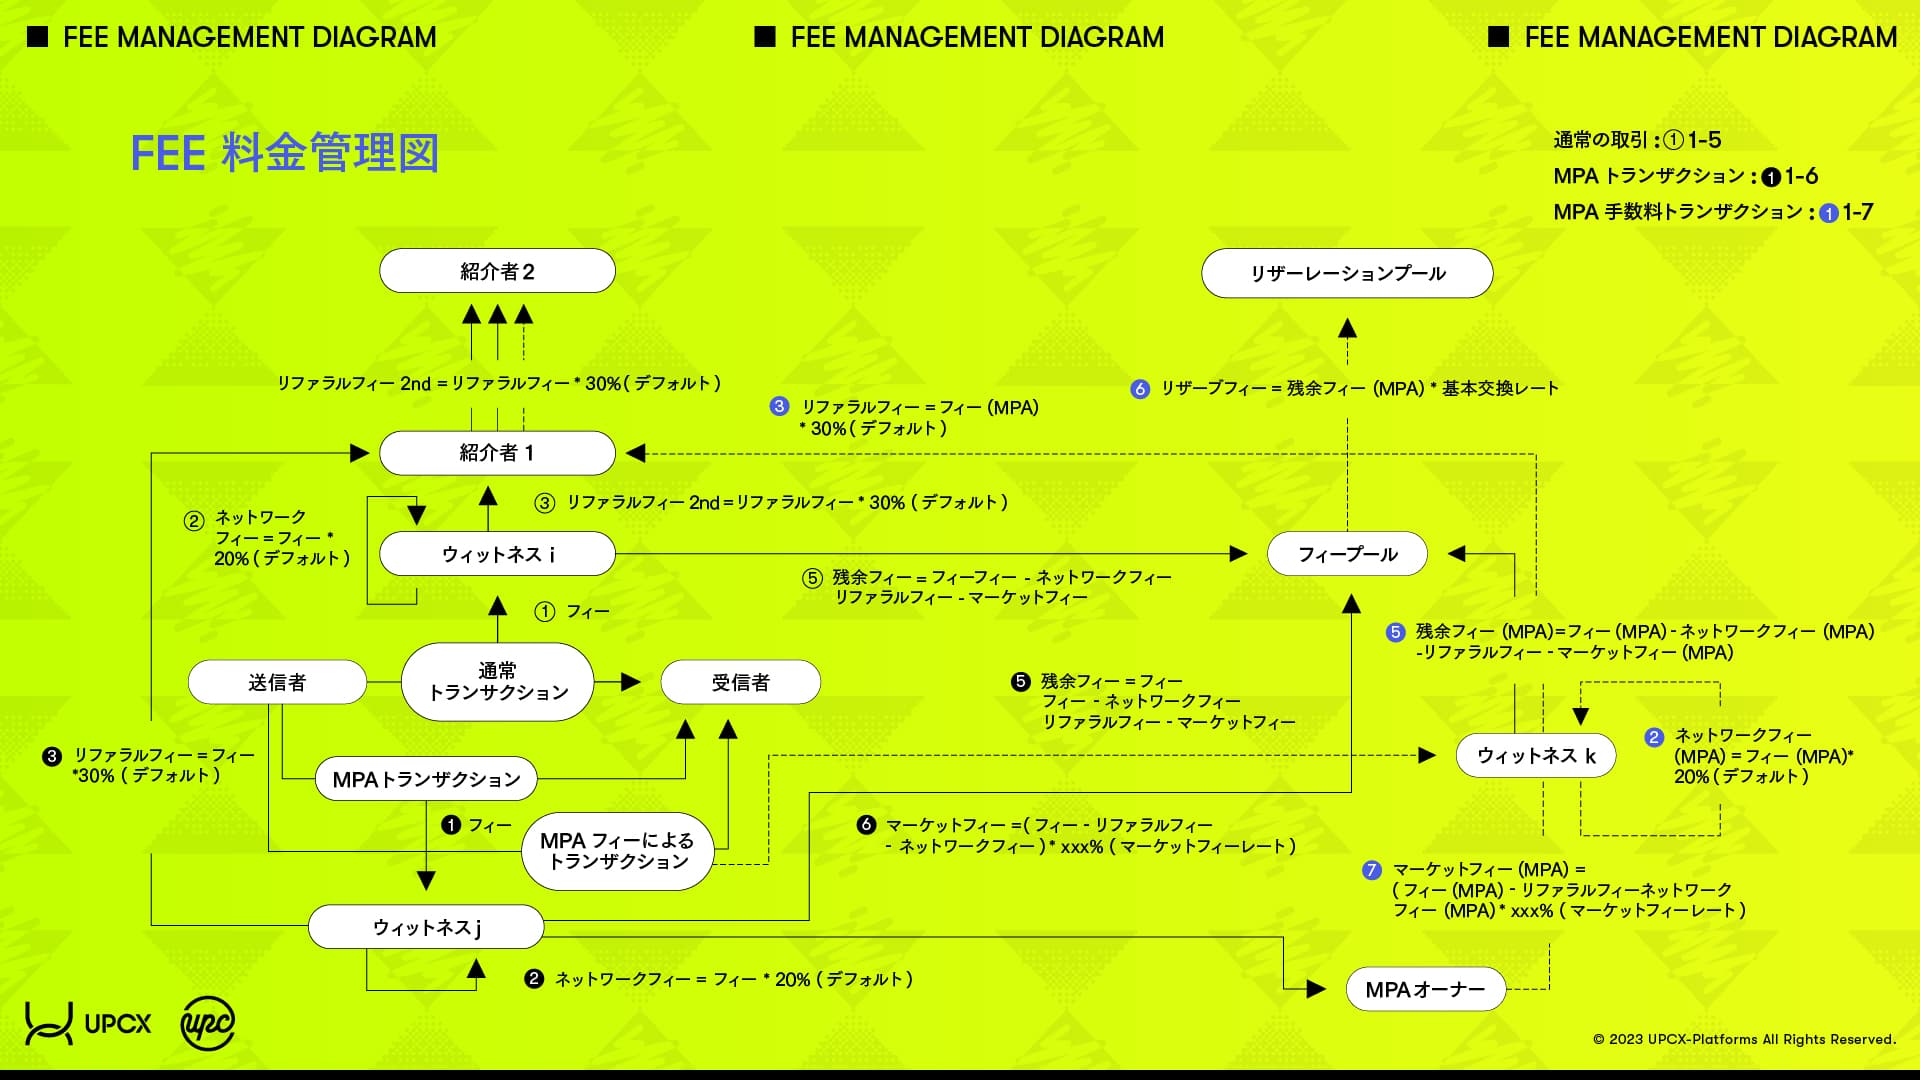 UPCX Fee Management Diagram